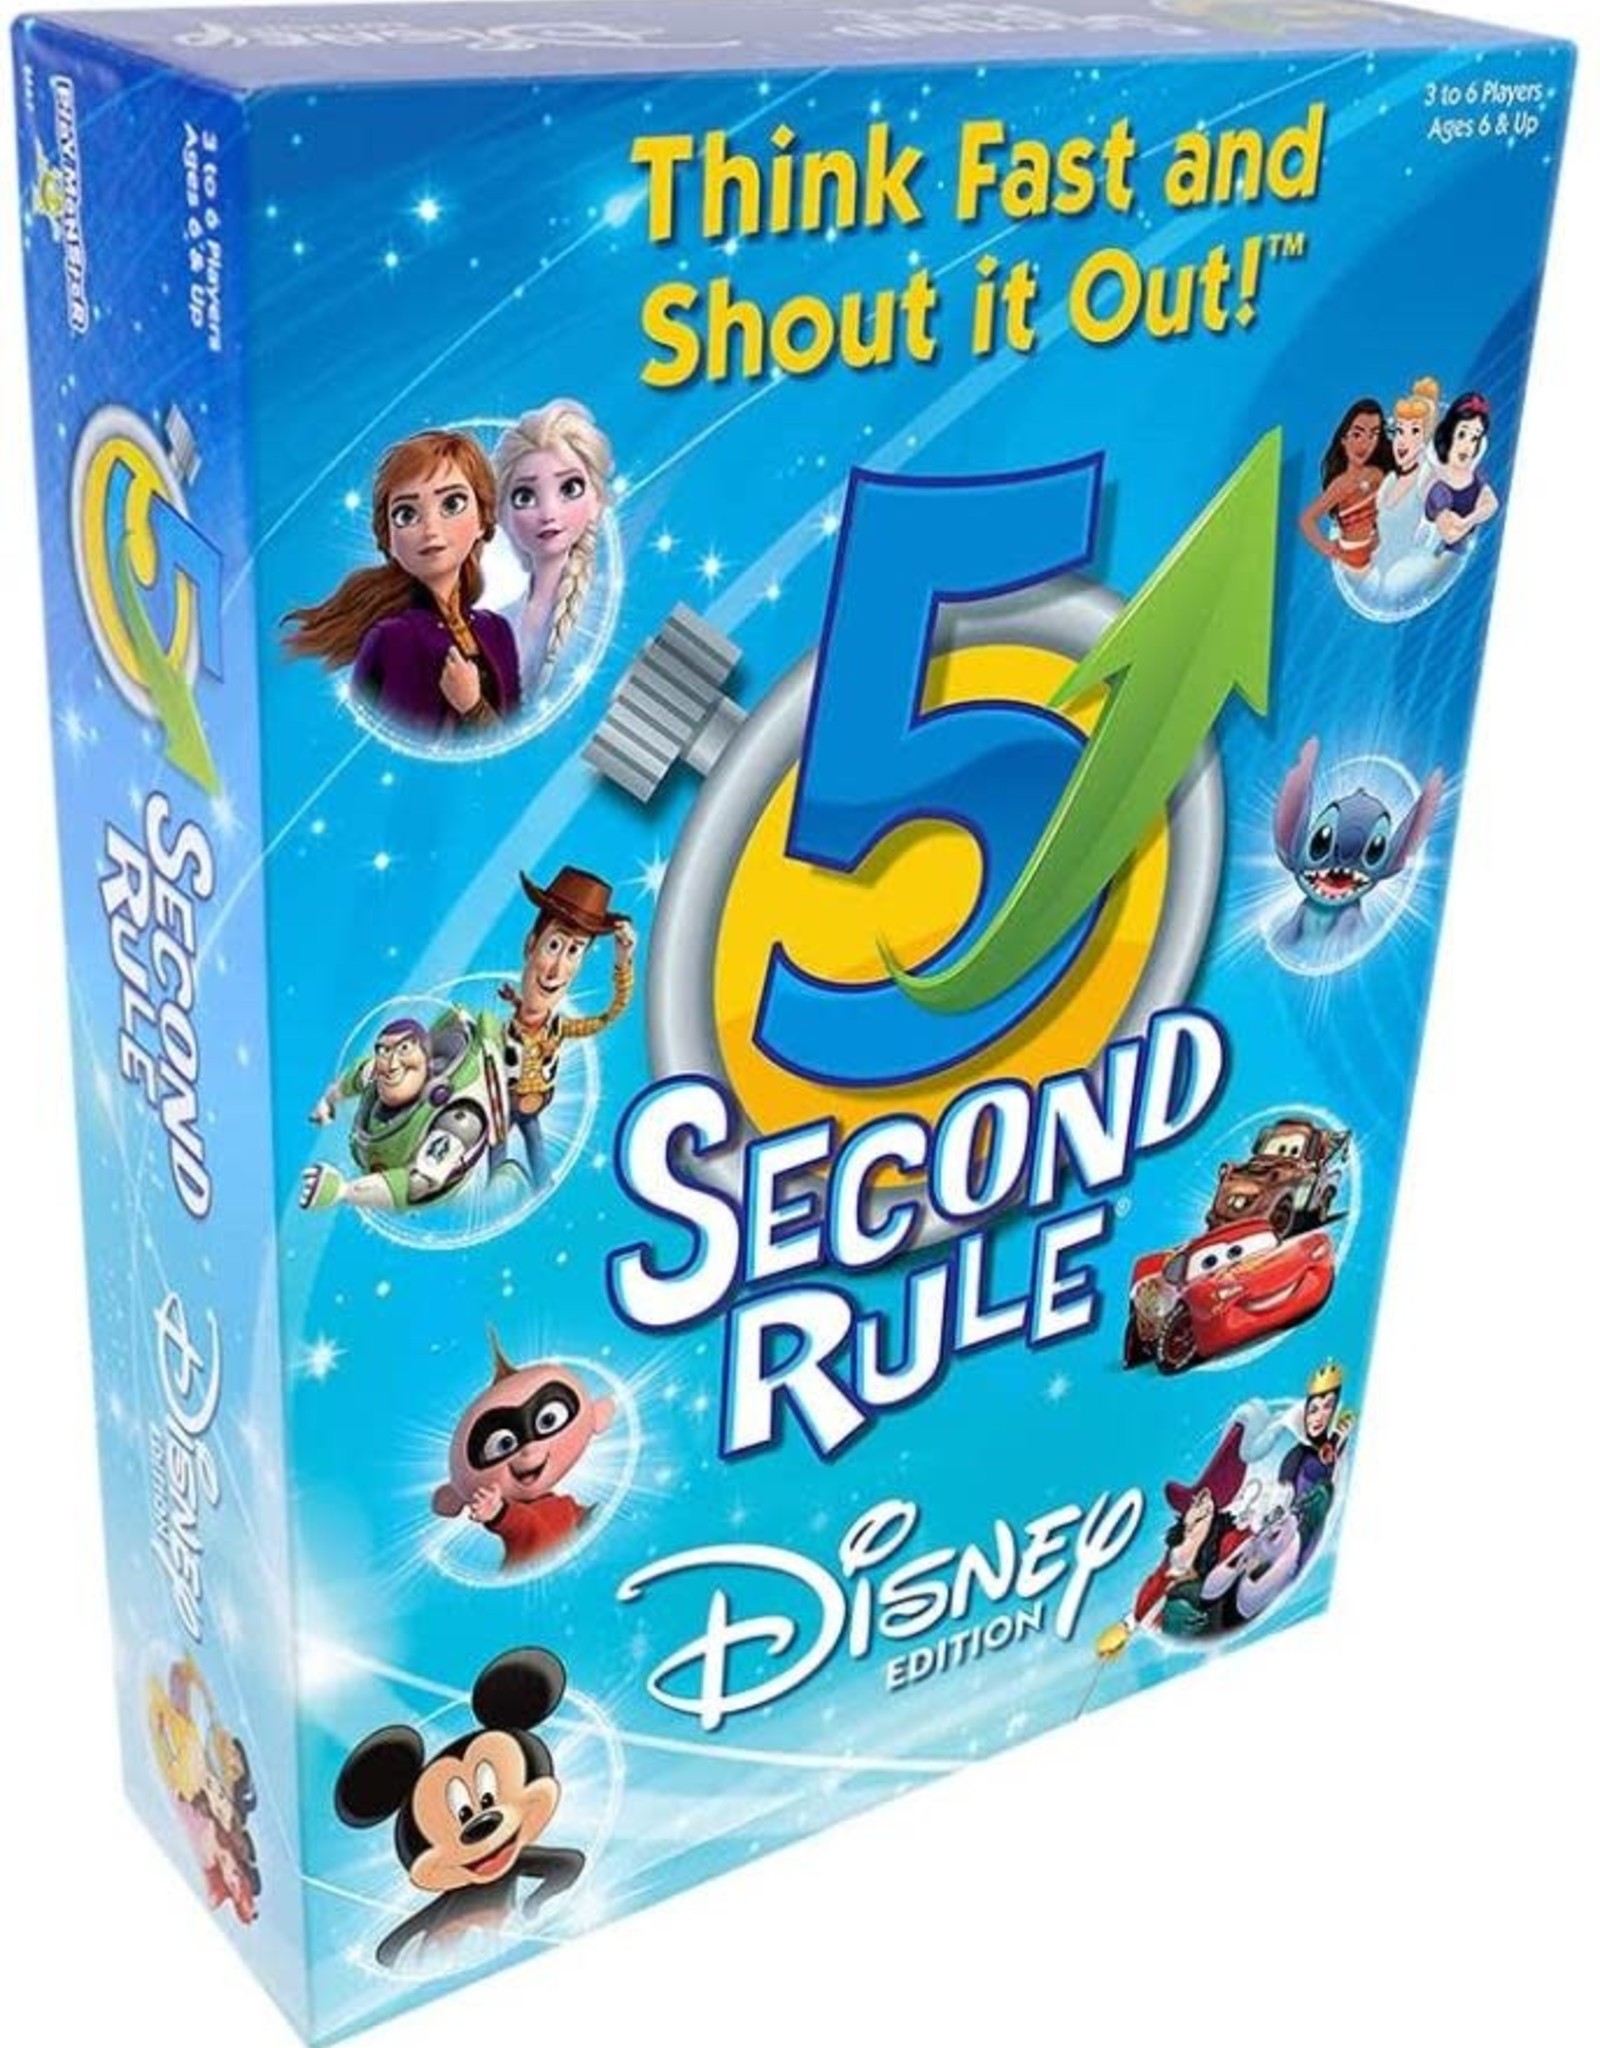 Disney 5 Second Rule® Disney® Edition Game